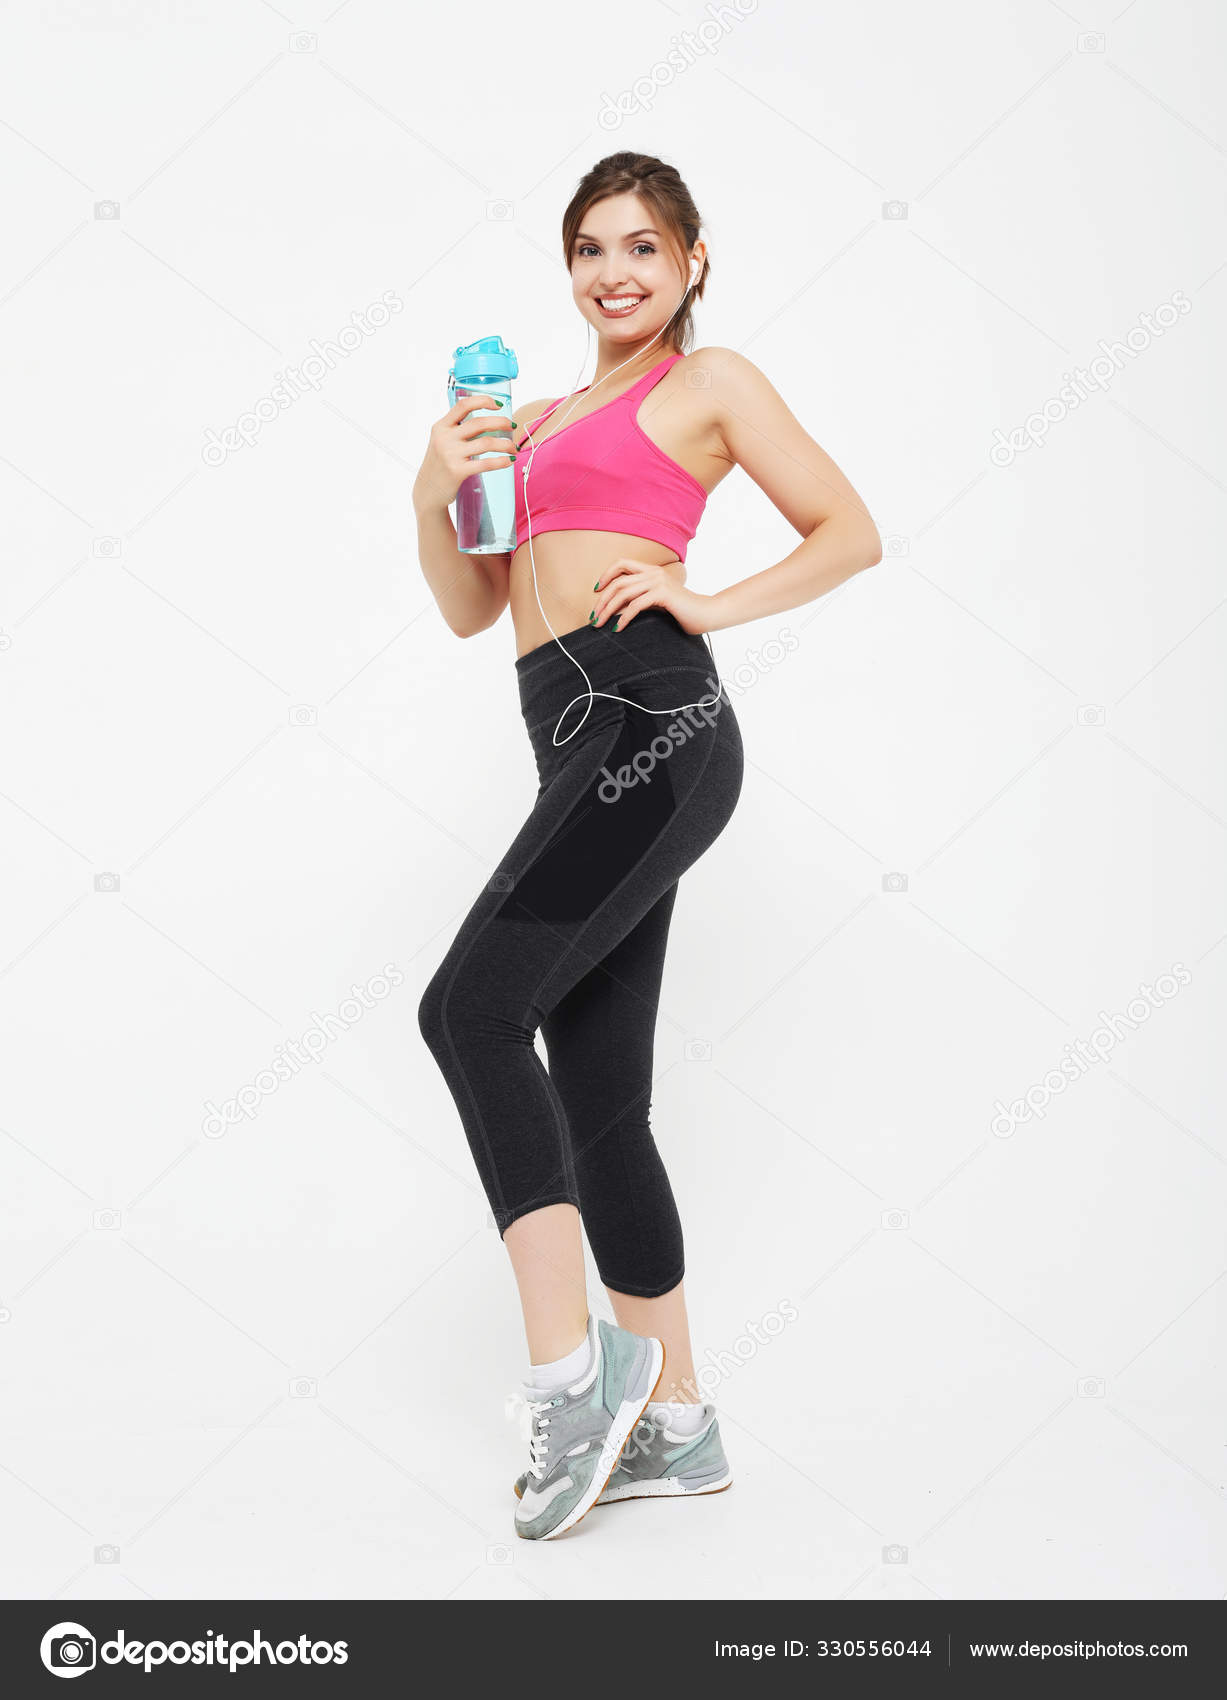 https://st3.depositphotos.com/1003713/33055/i/1600/depositphotos_330556044-stock-photo-sport-people-and-fitness-concept.jpg